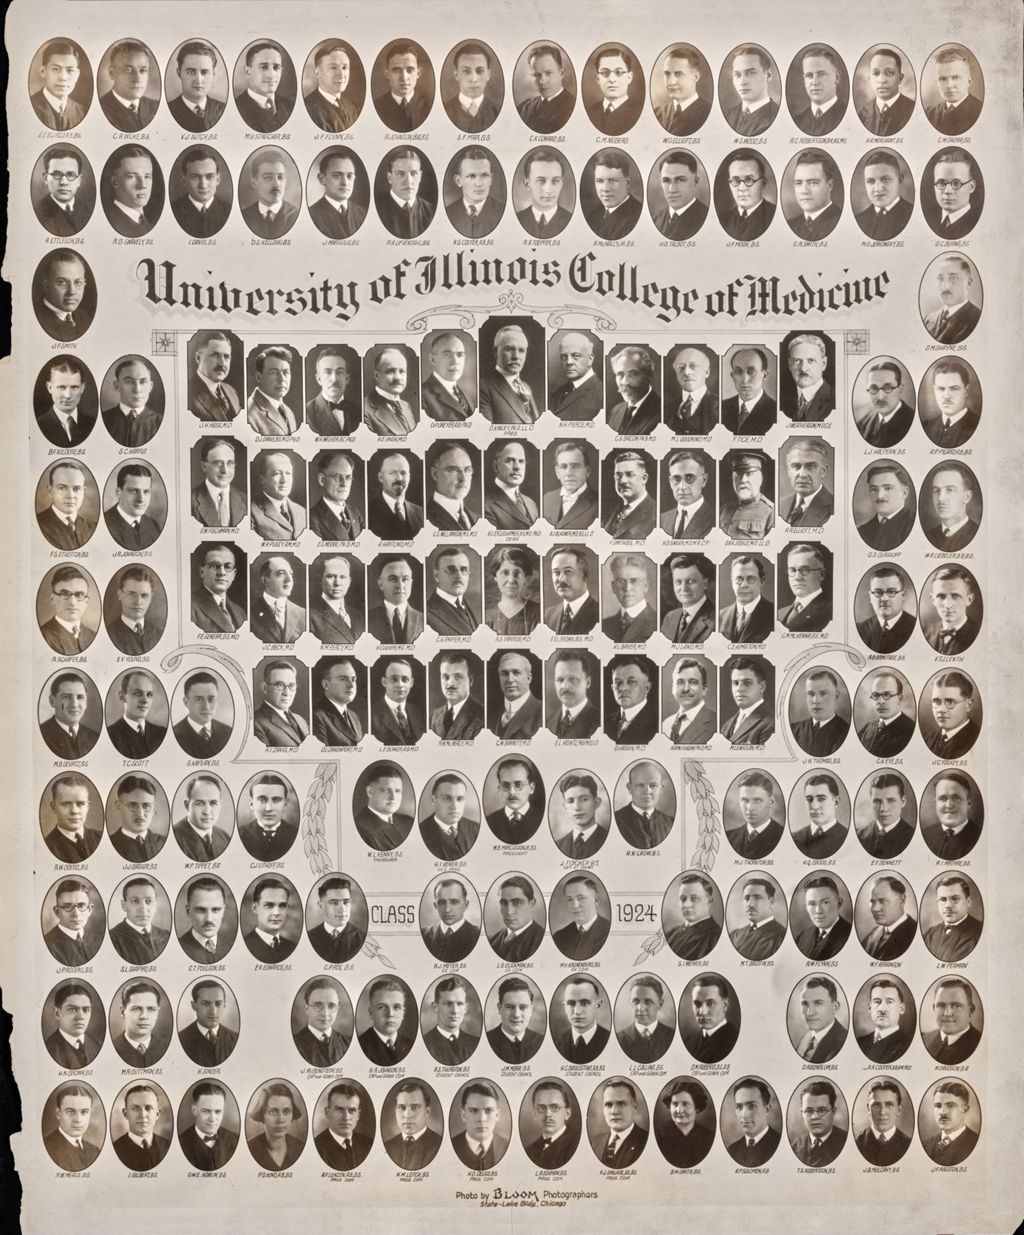 Miniature of 1924 graduating class, University of Illinois College of Medicine